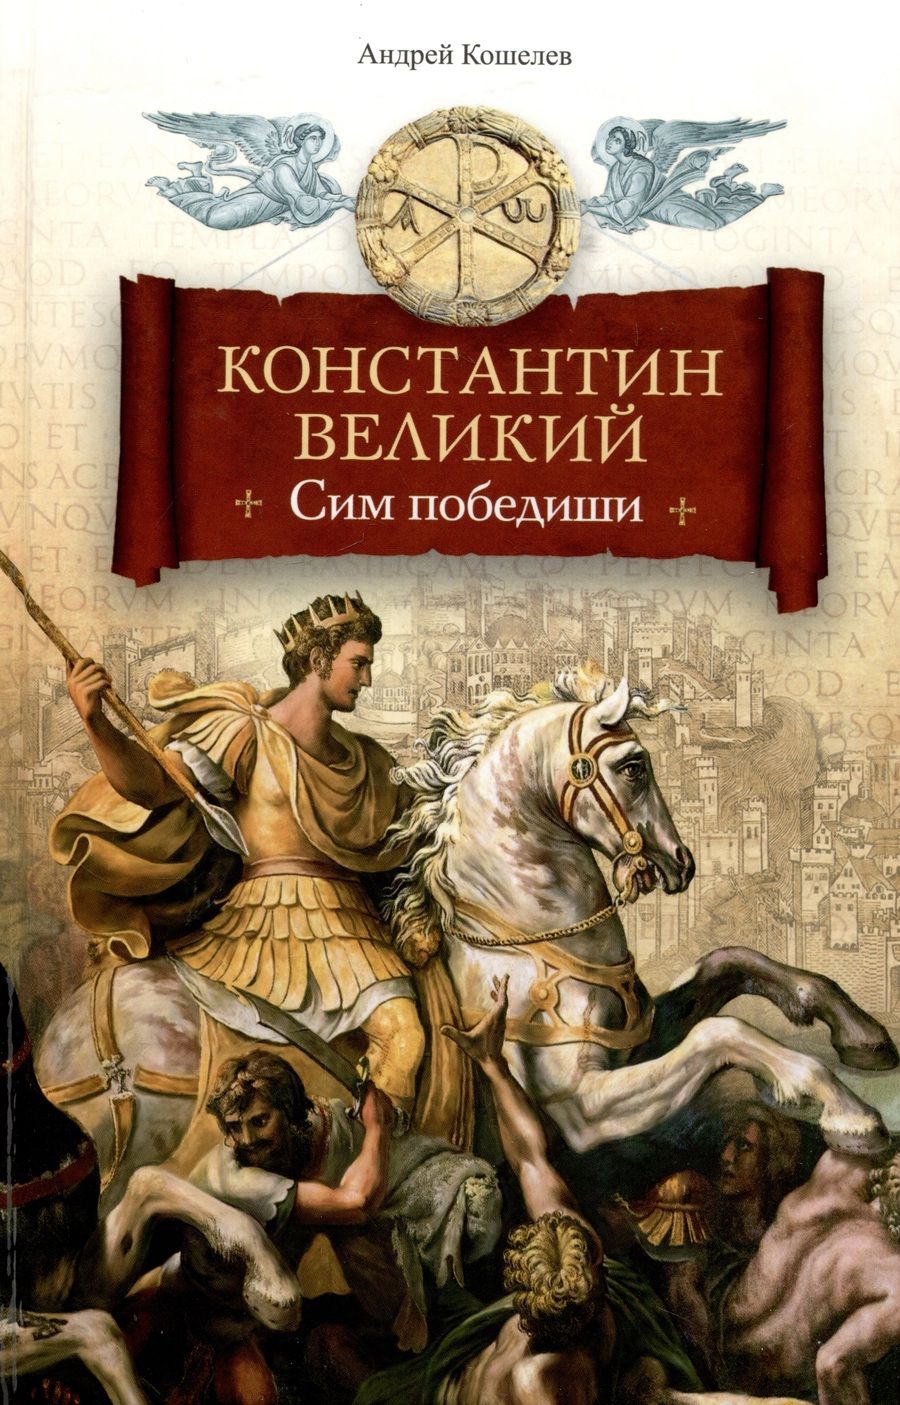 Обложка книги "Кошелев: Константин Великий. Сим победиши"